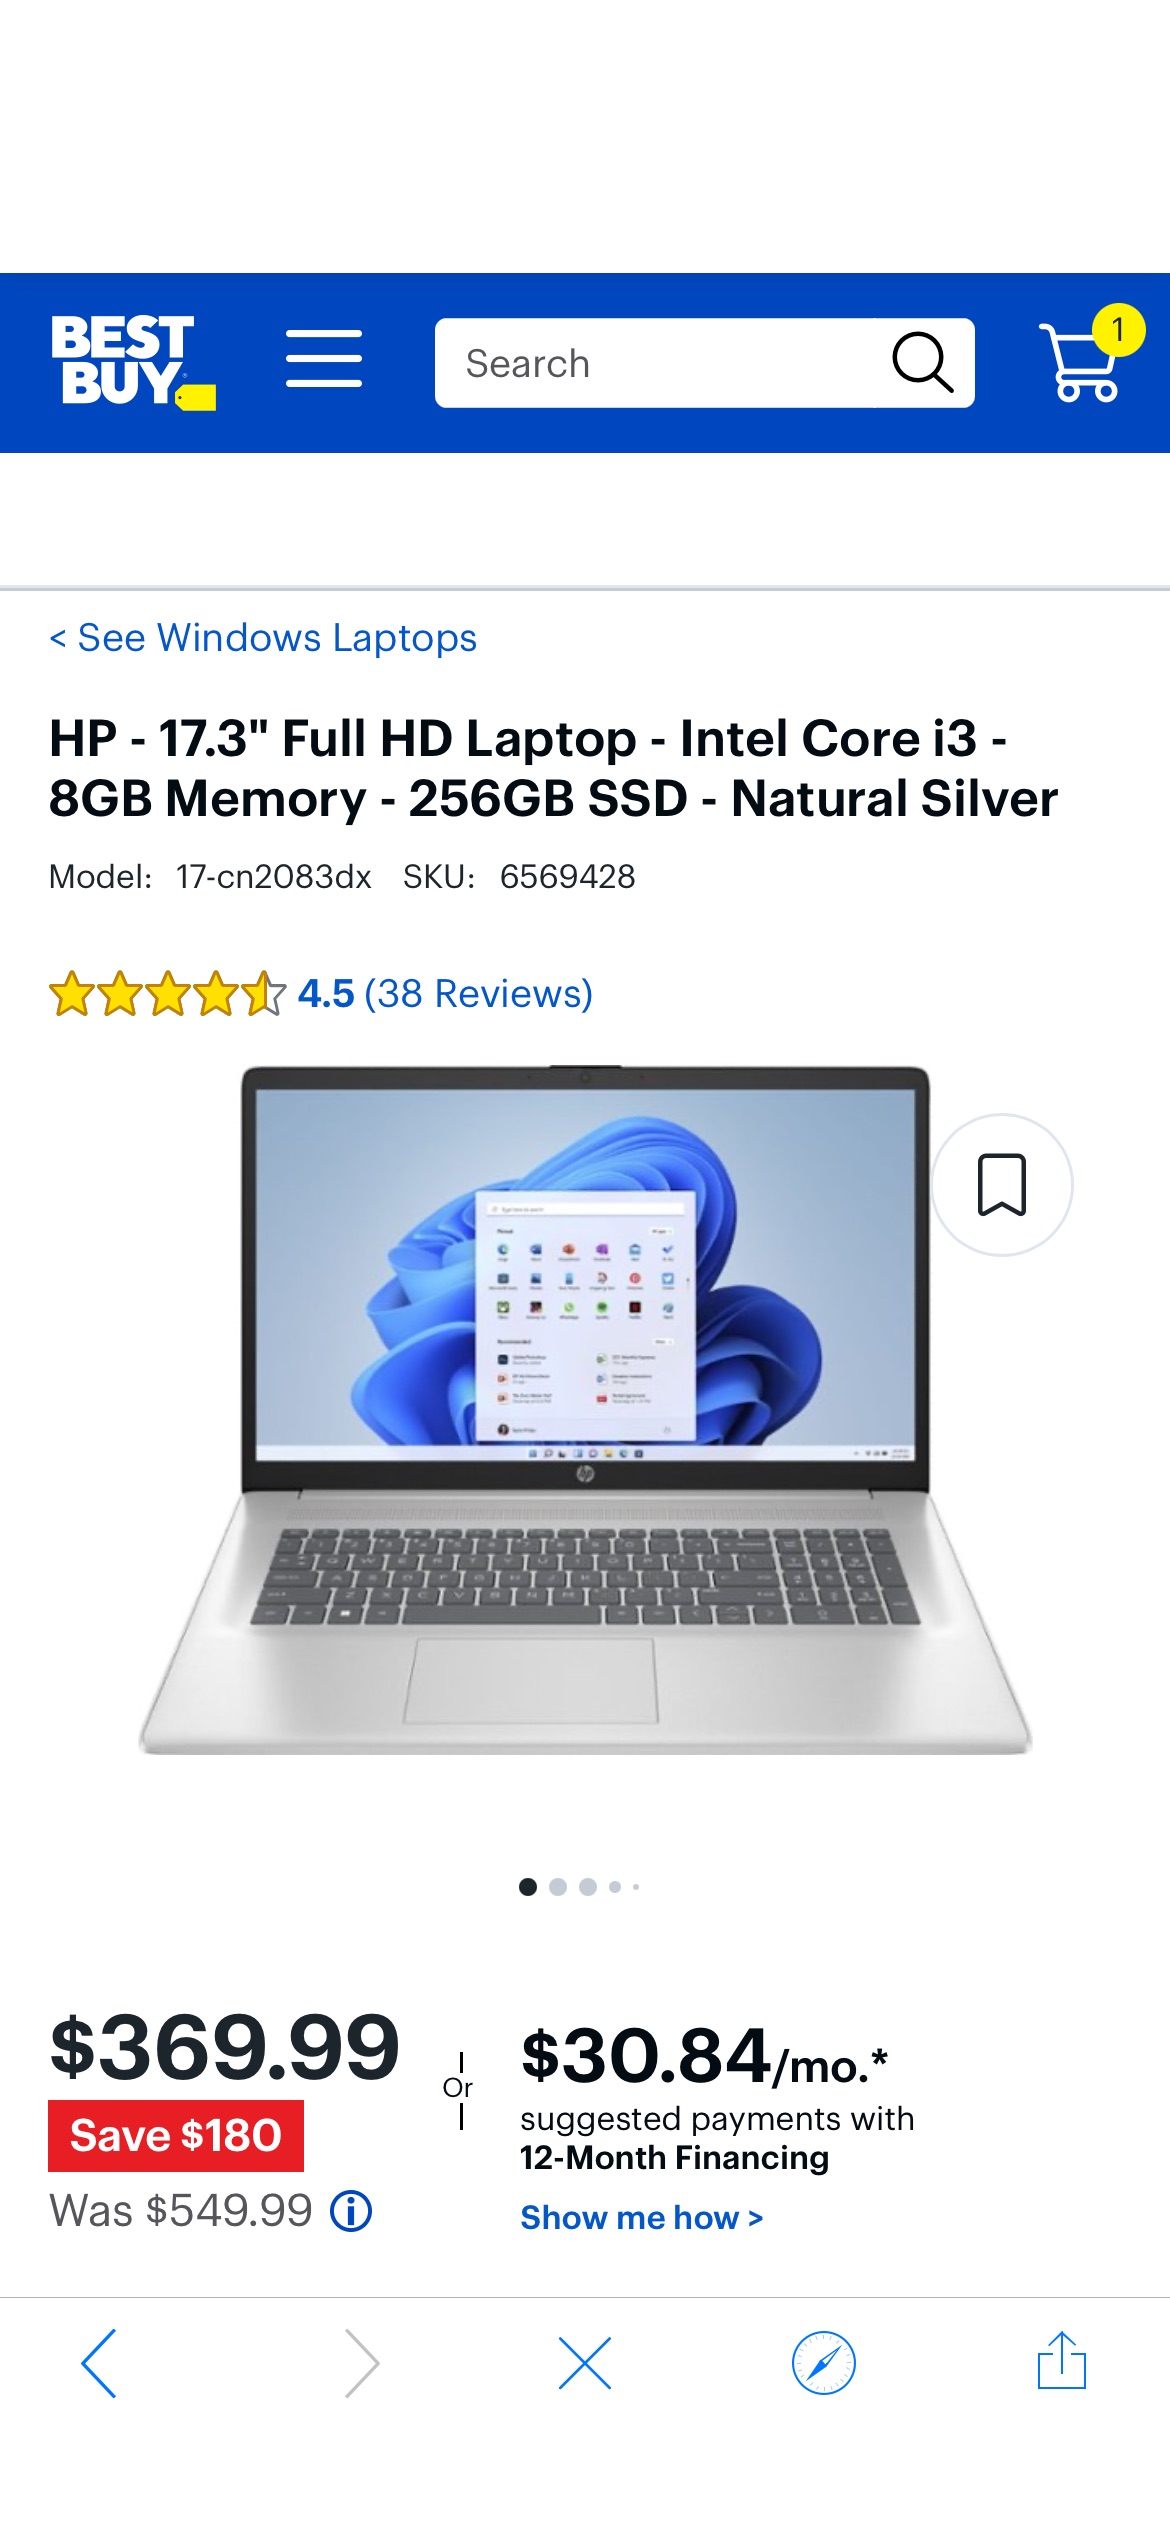 HP 17.3" Full HD Laptop Intel Core i3 8GB Memory 256GB SSD Natural Silver 17-cn2083dx - Best Buy